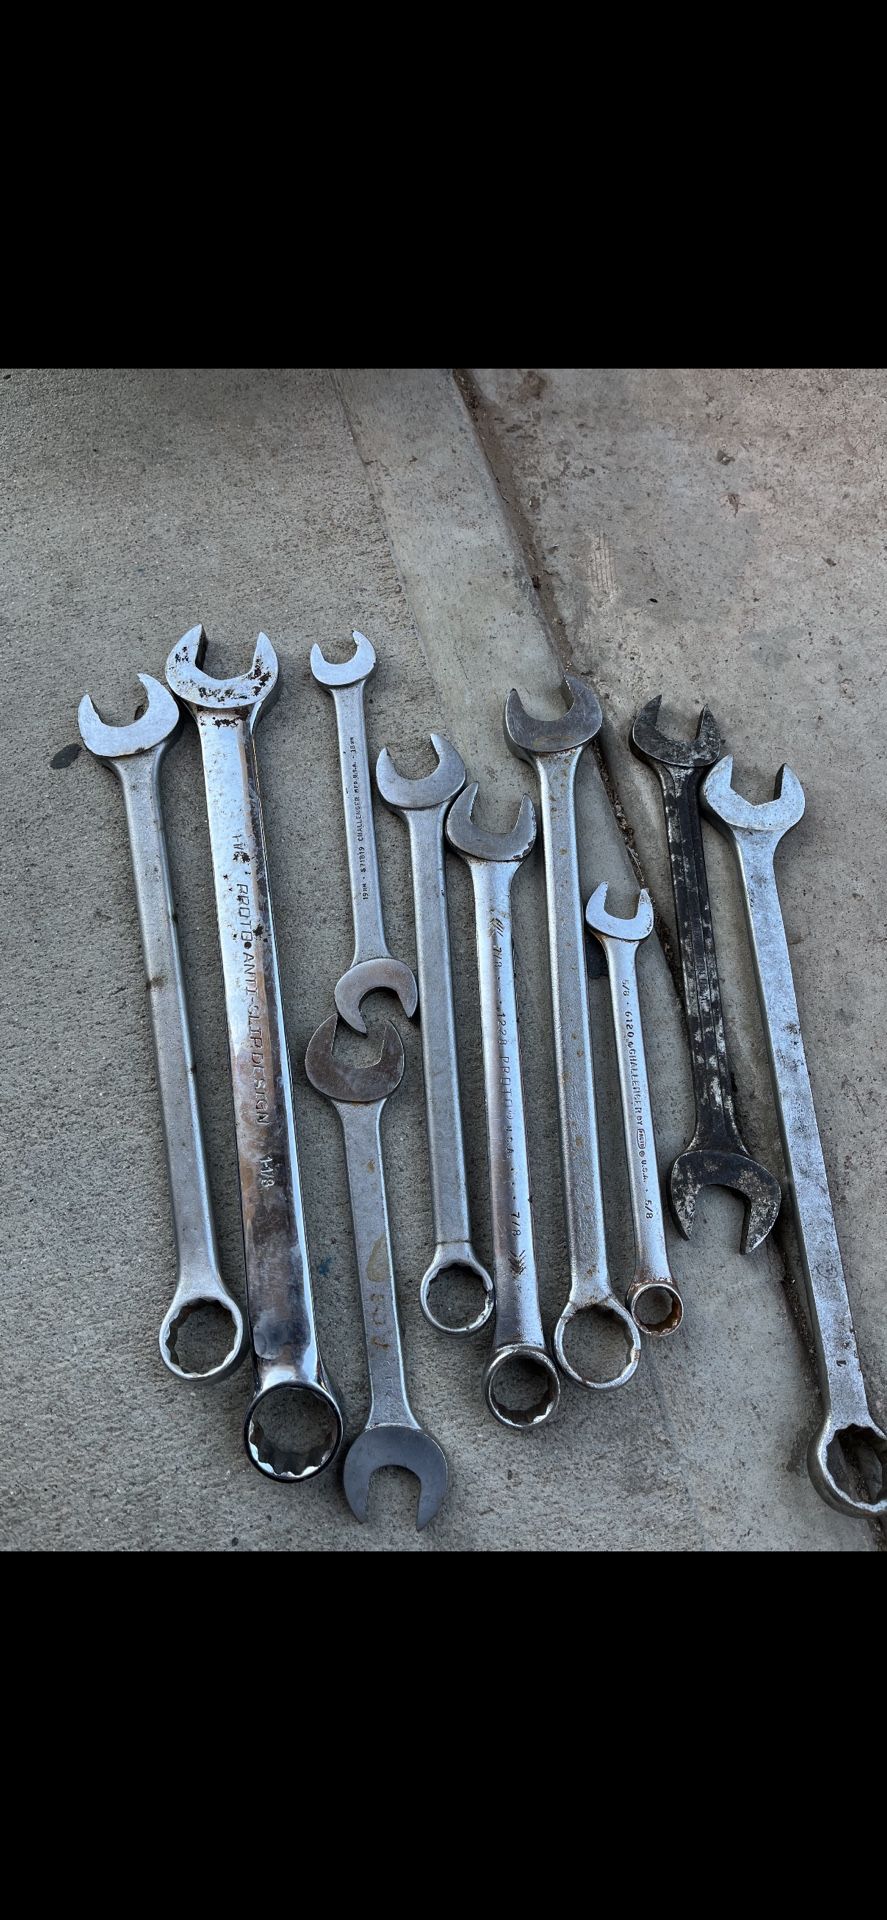 Proto Wrenches 